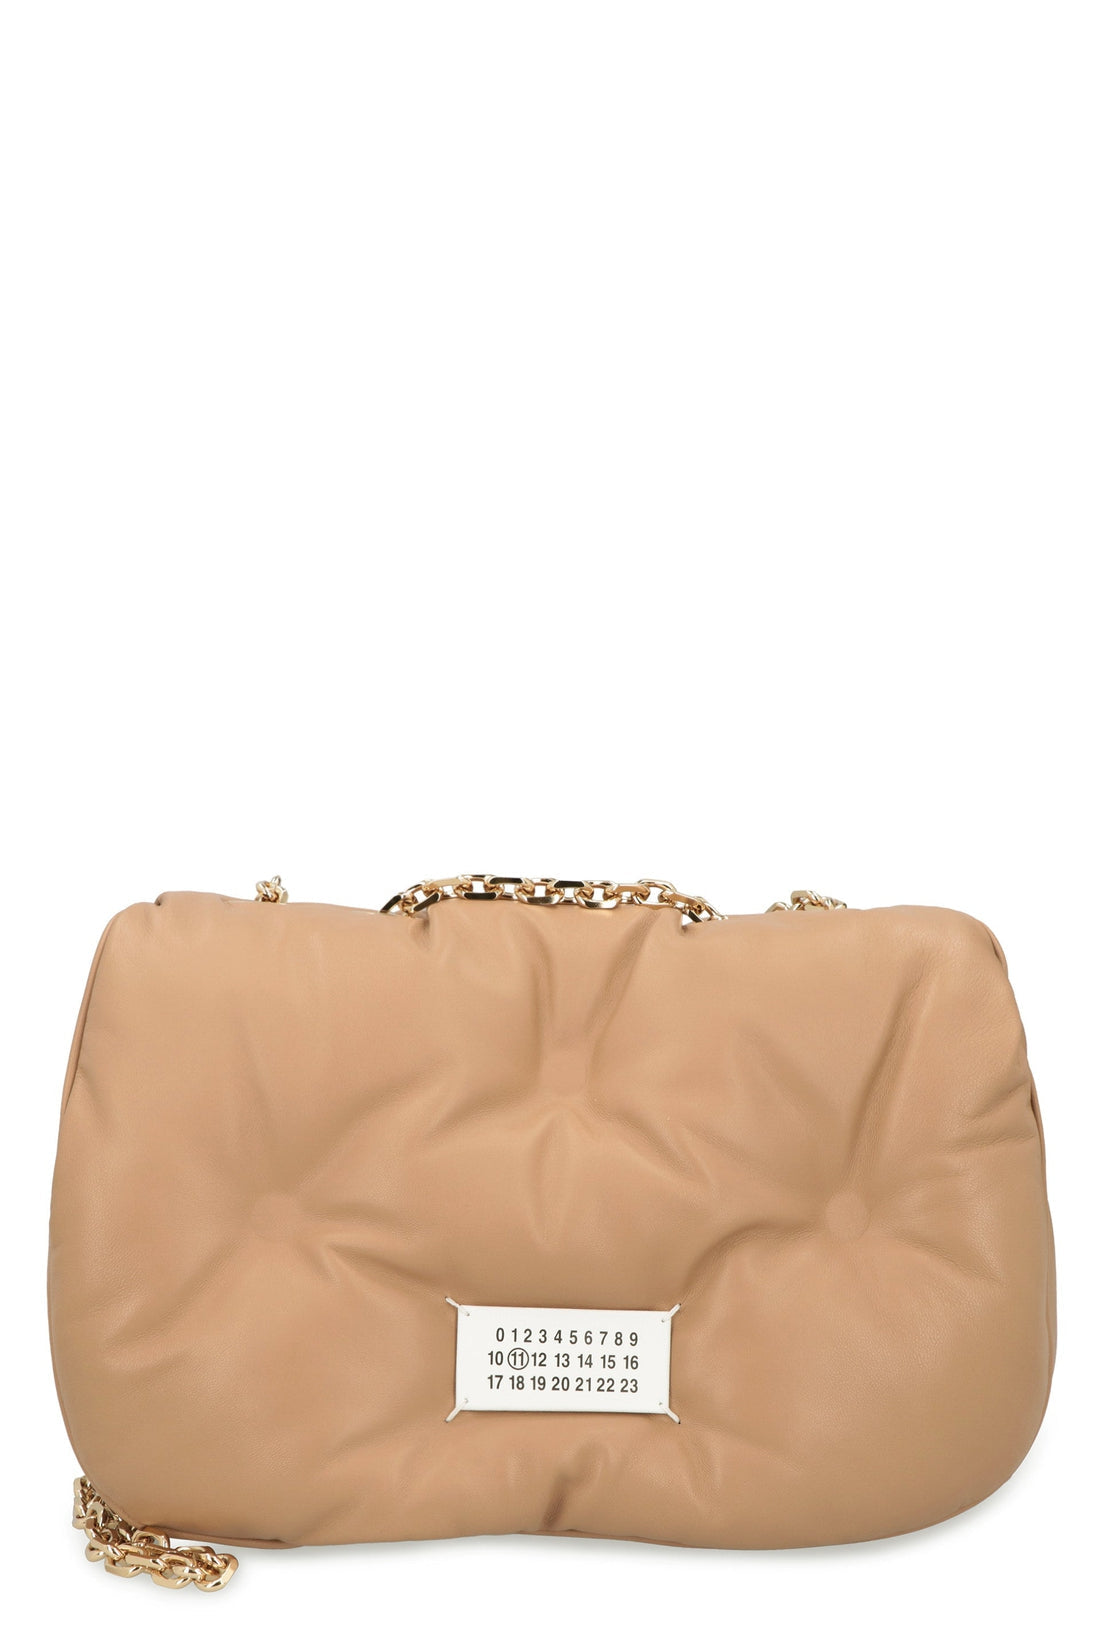 Maison Margiela-OUTLET-SALE-Glam Slam leather shoulder bag-ARCHIVIST